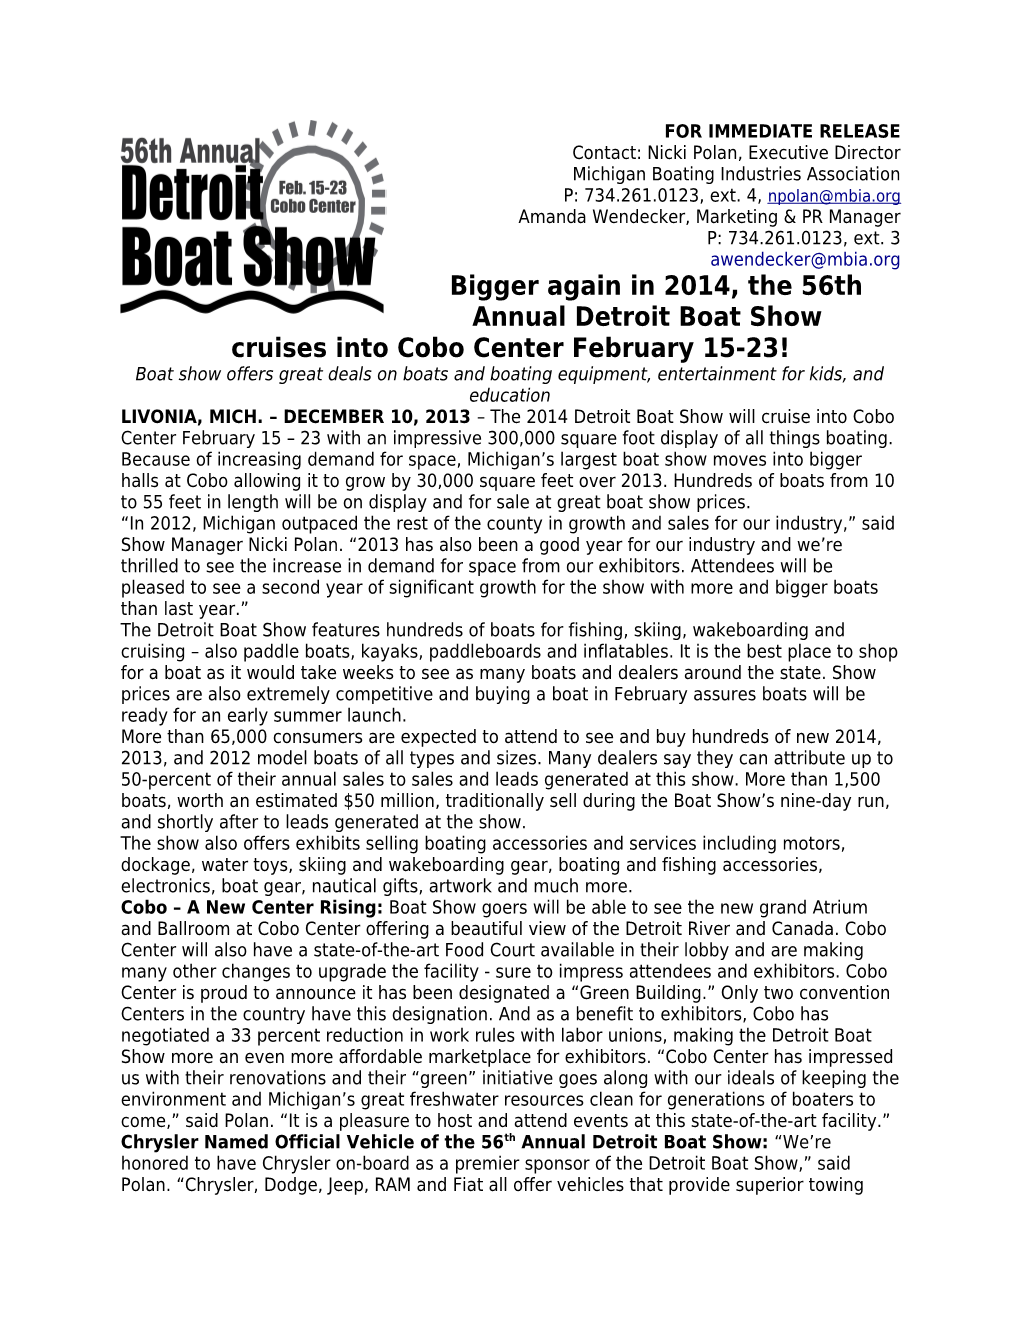 Bigger Again in 2014, the 56Th Annual Detroit Boat Show